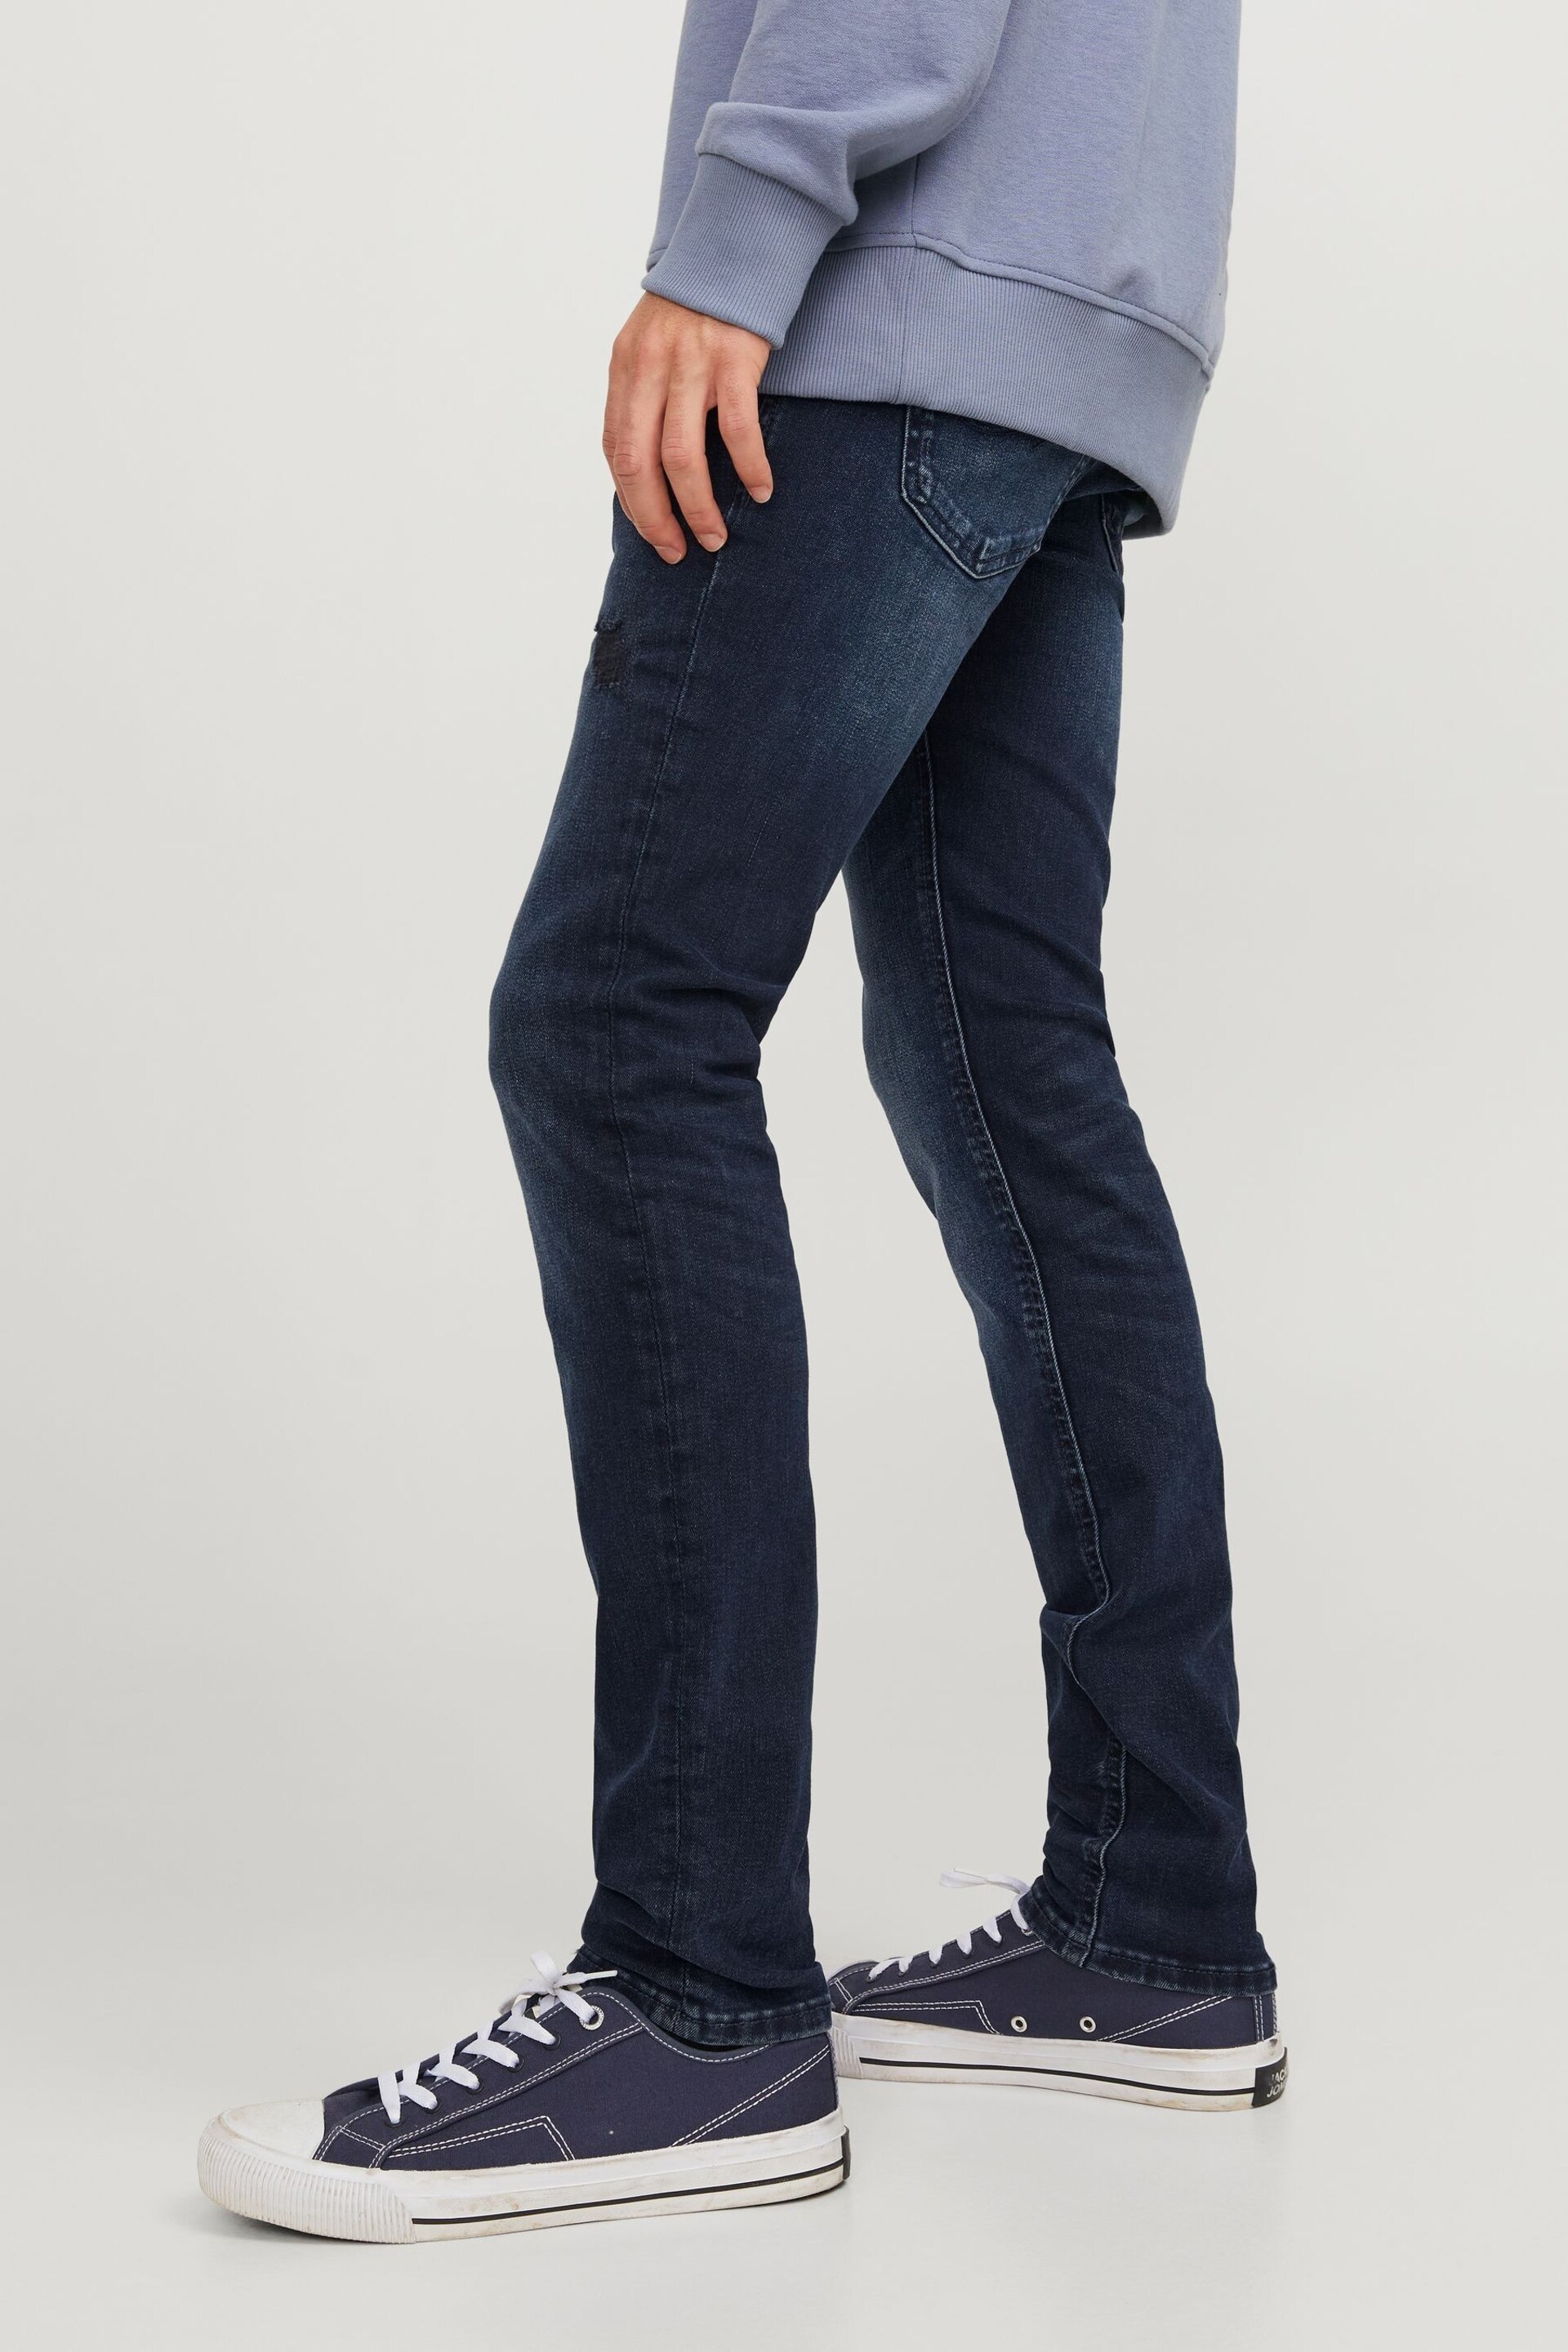 JACK & JONES Blue Skinny Liam Jeans - Image 3 of 8